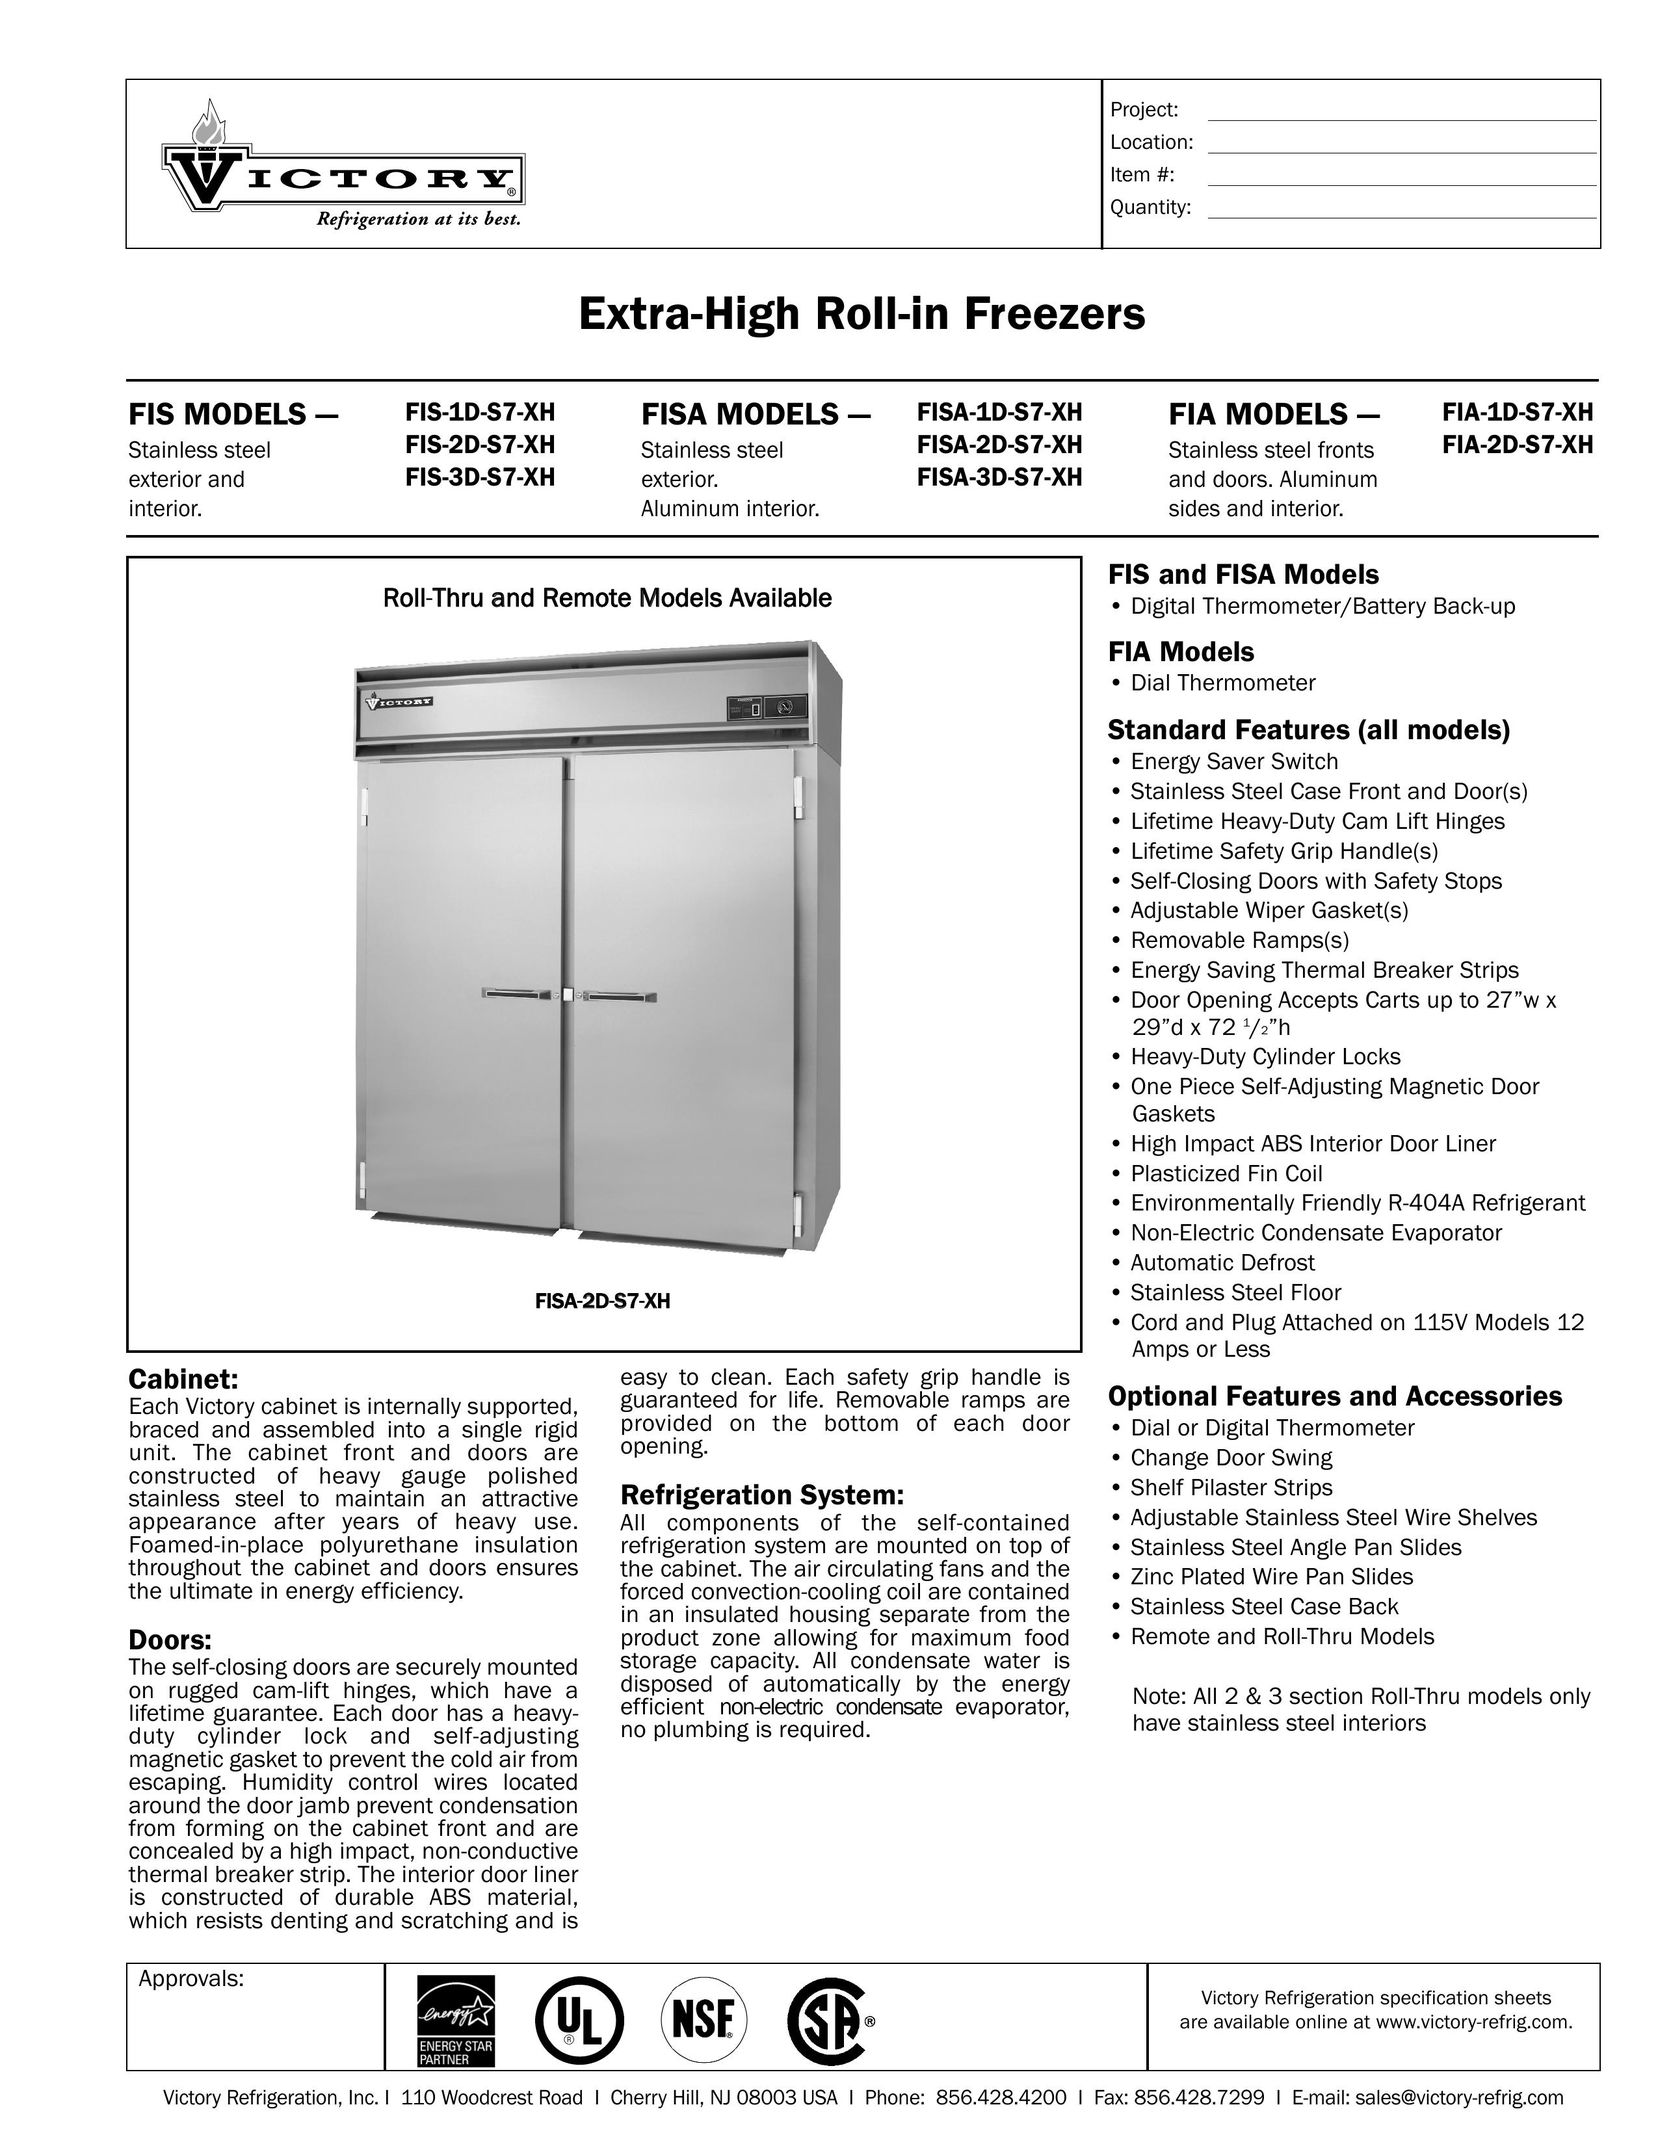 Victory Refrigeration FIA-1D-S7-XH Freezer User Manual